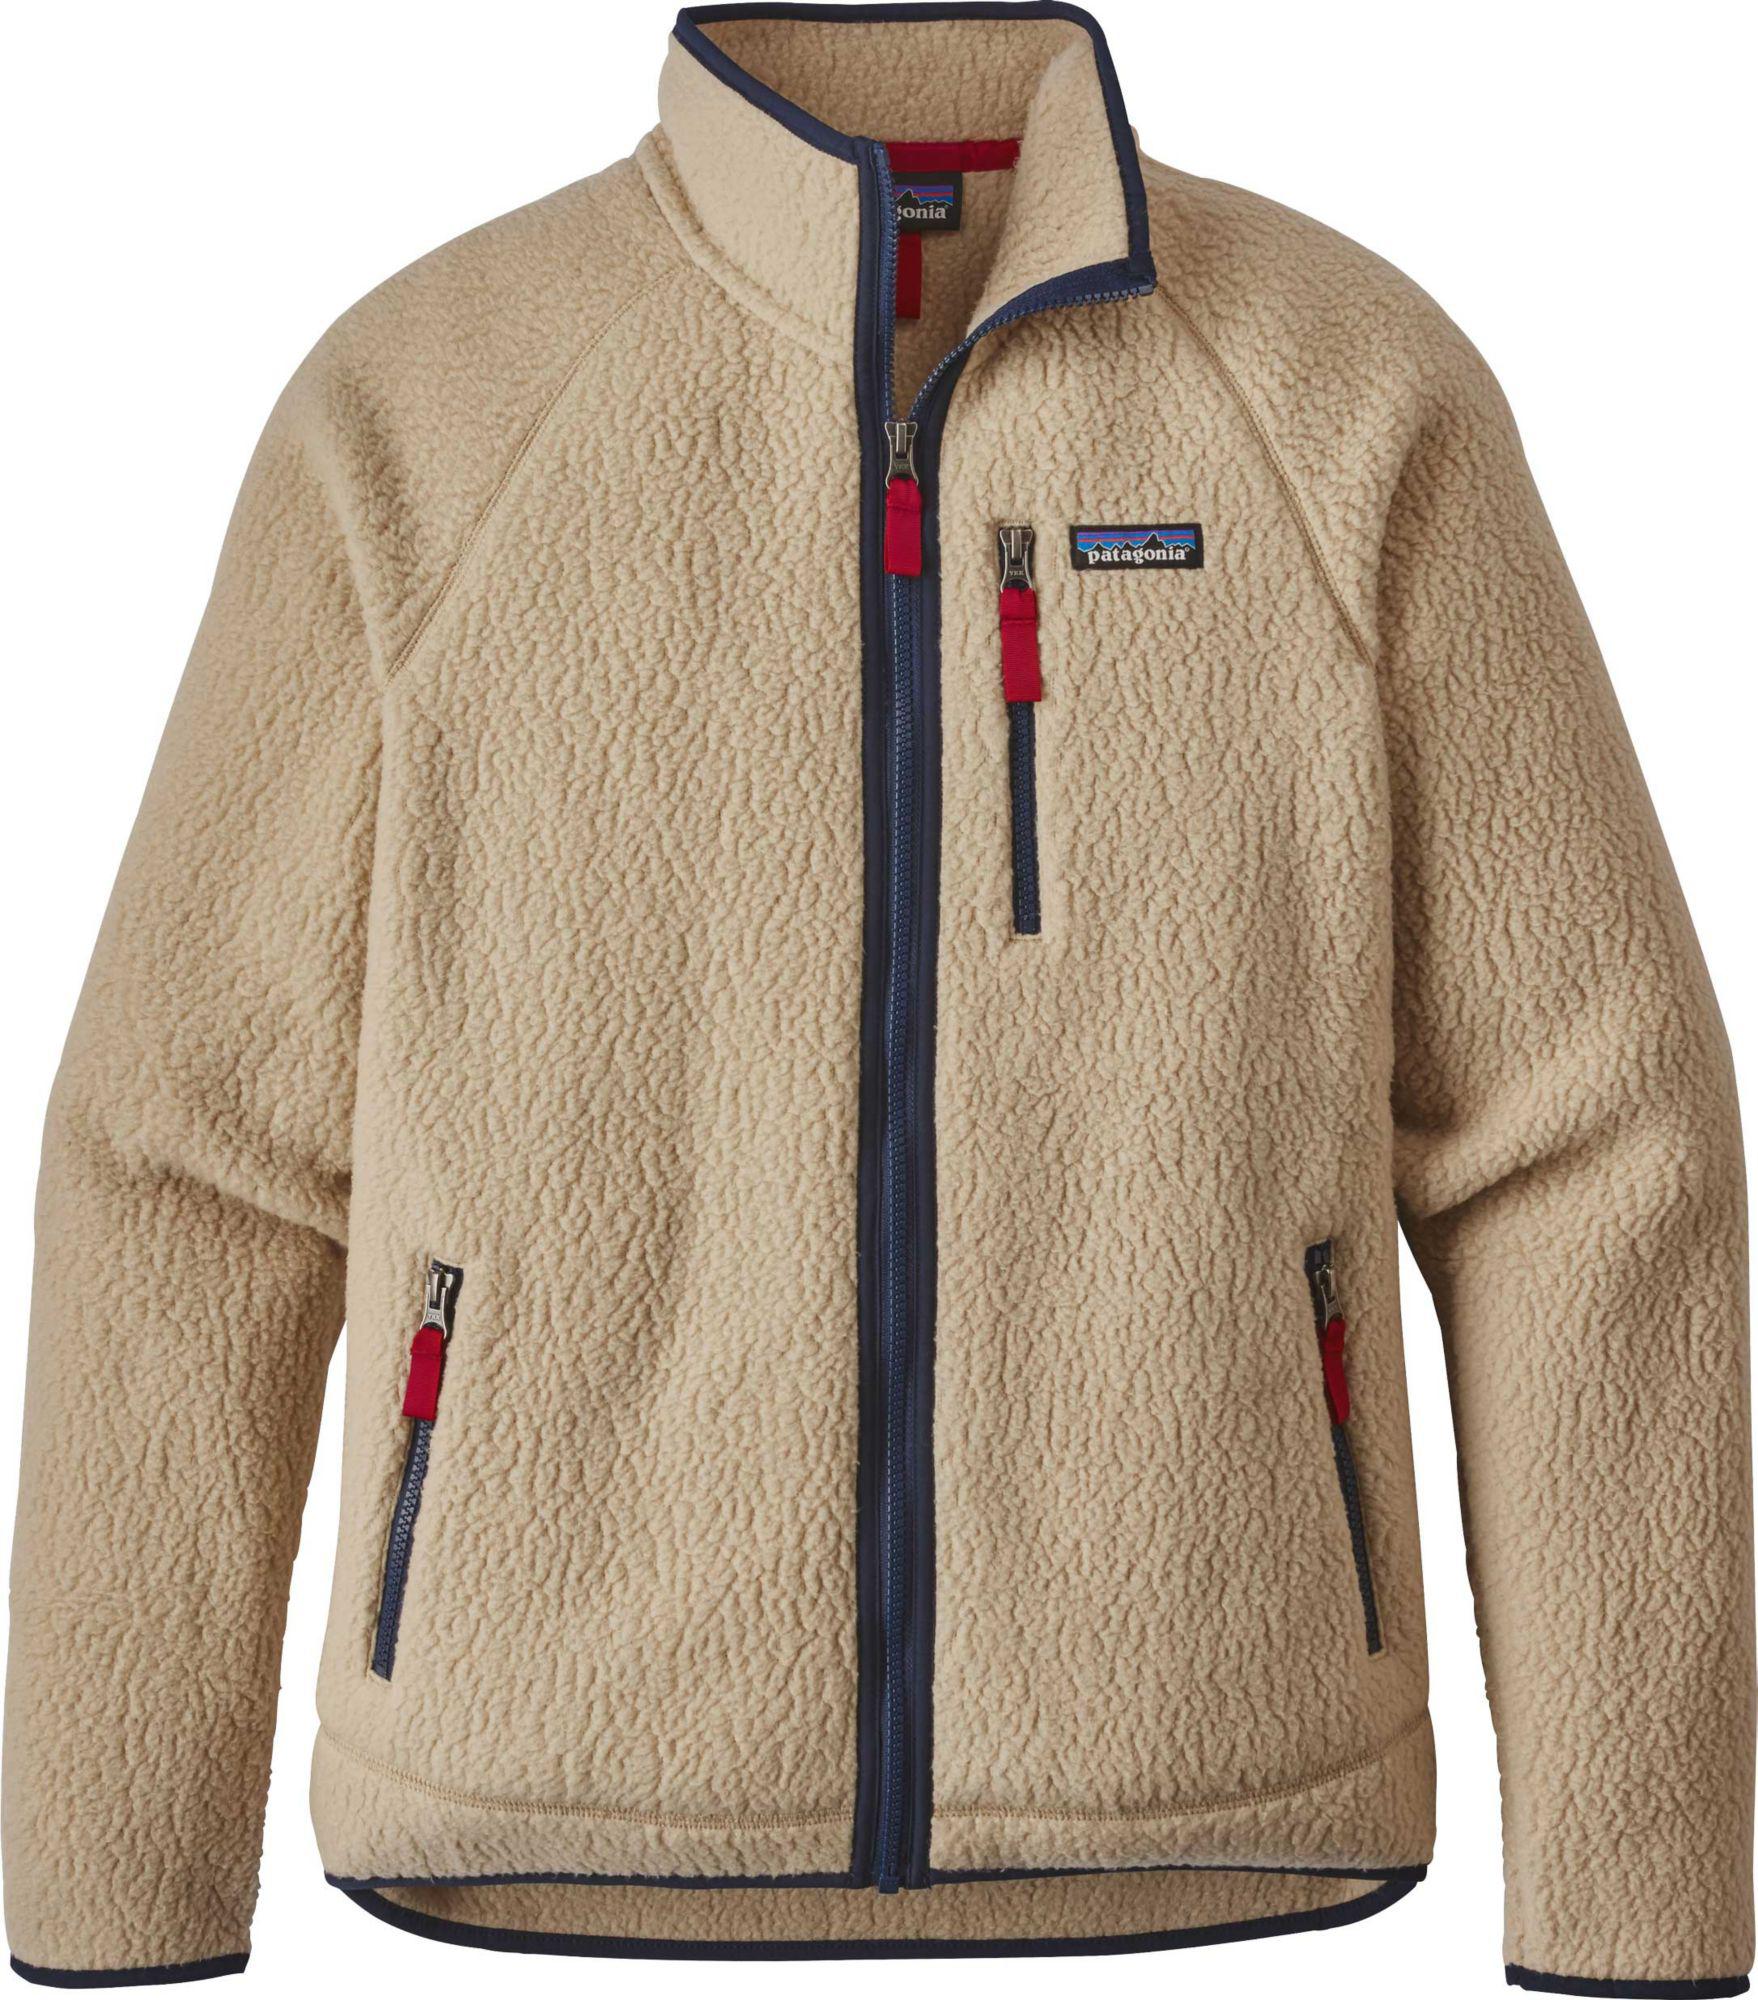 Patagonia Retro Pile Fleece Jacket in Natural for Men - Lyst